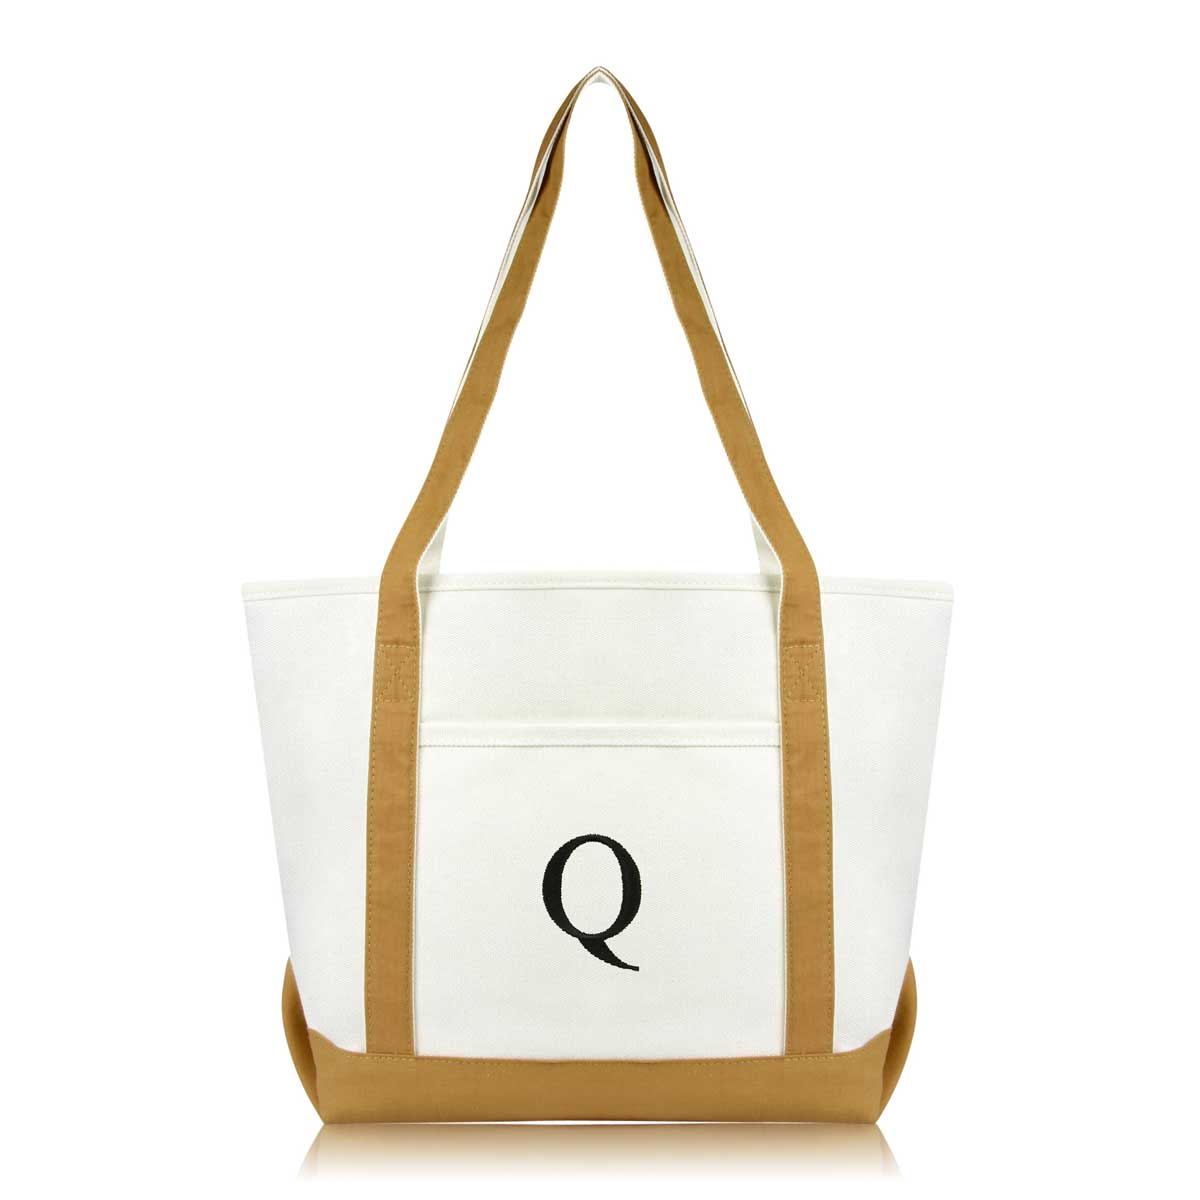 Dalix Medium Personalized Tote Bag Monogrammed Initial Letter - Q